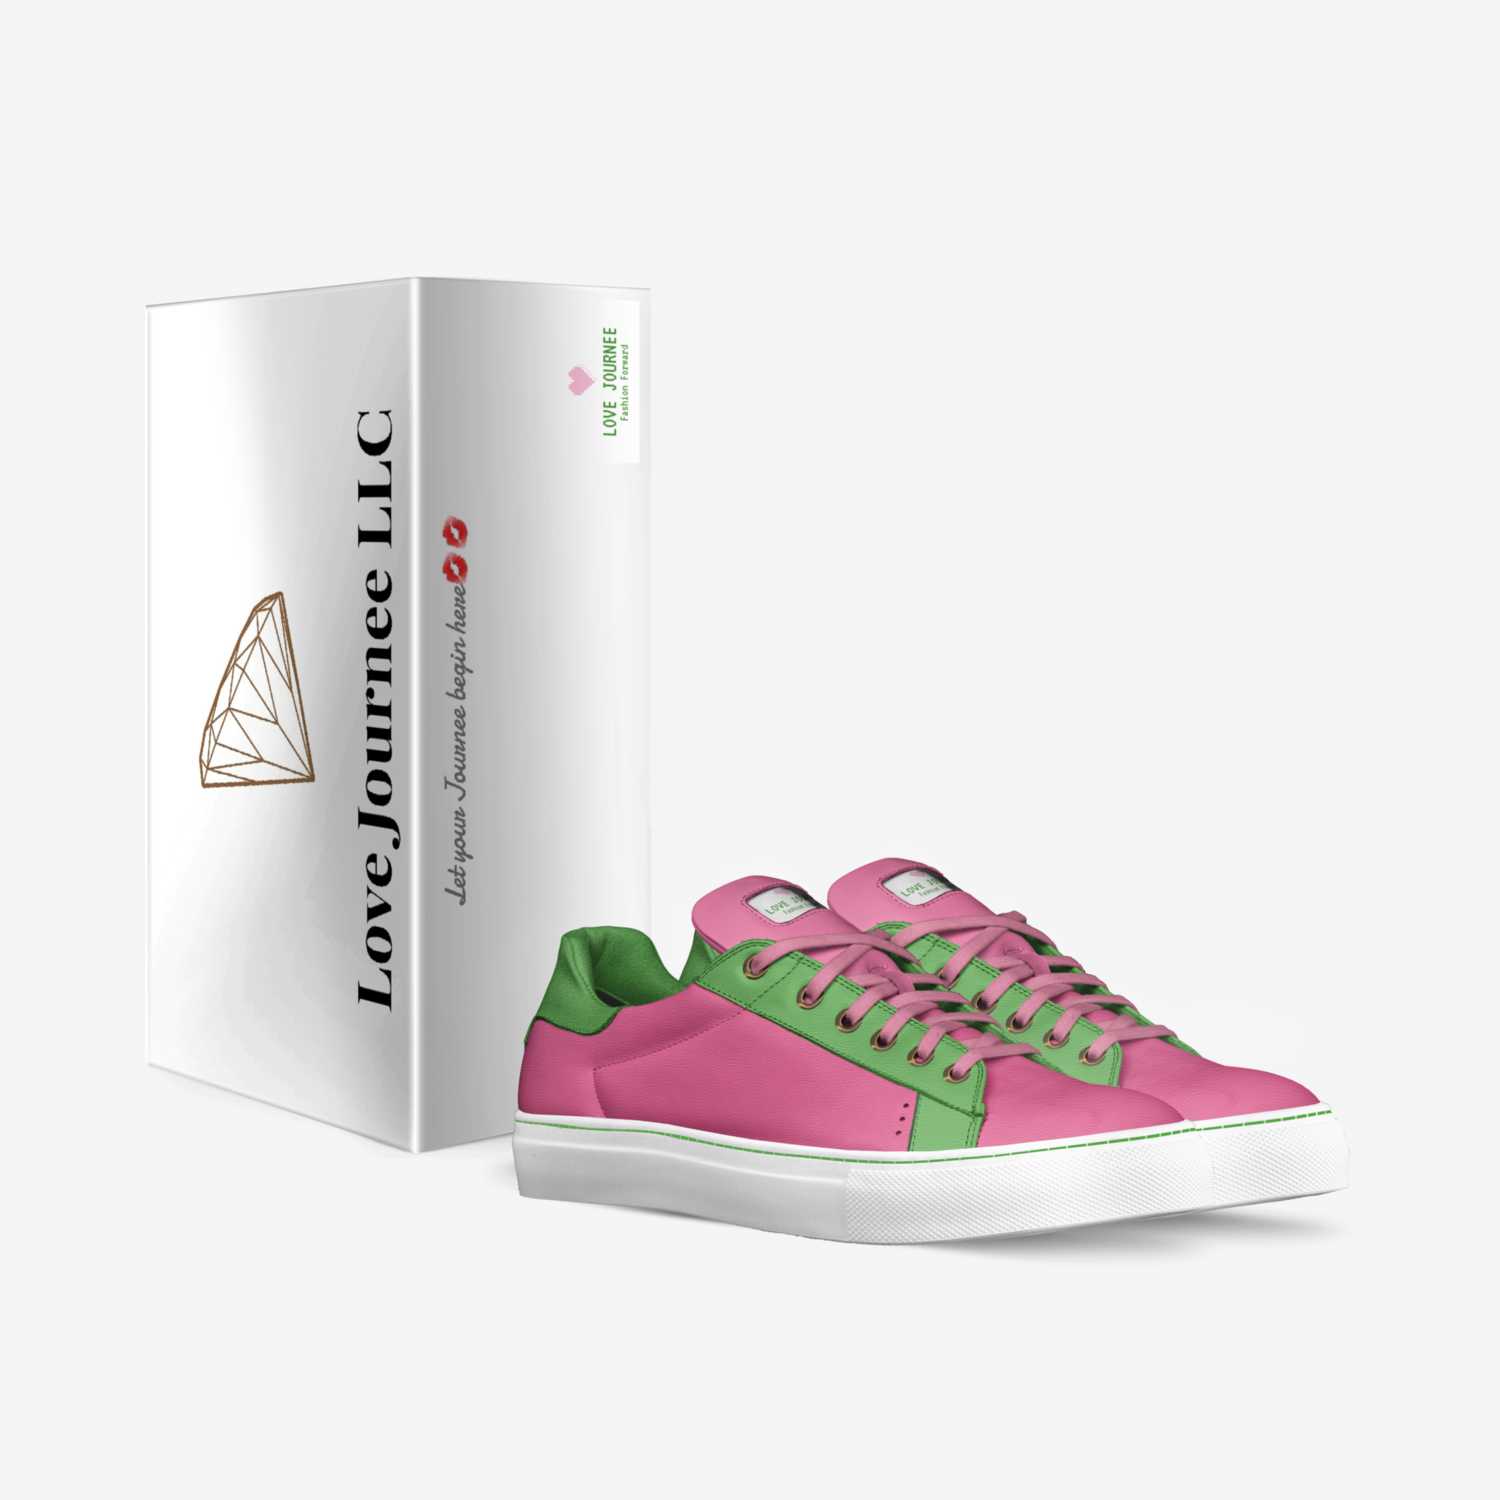 Love Journee custom made in Italy shoes by Tajada Barefield | Box view